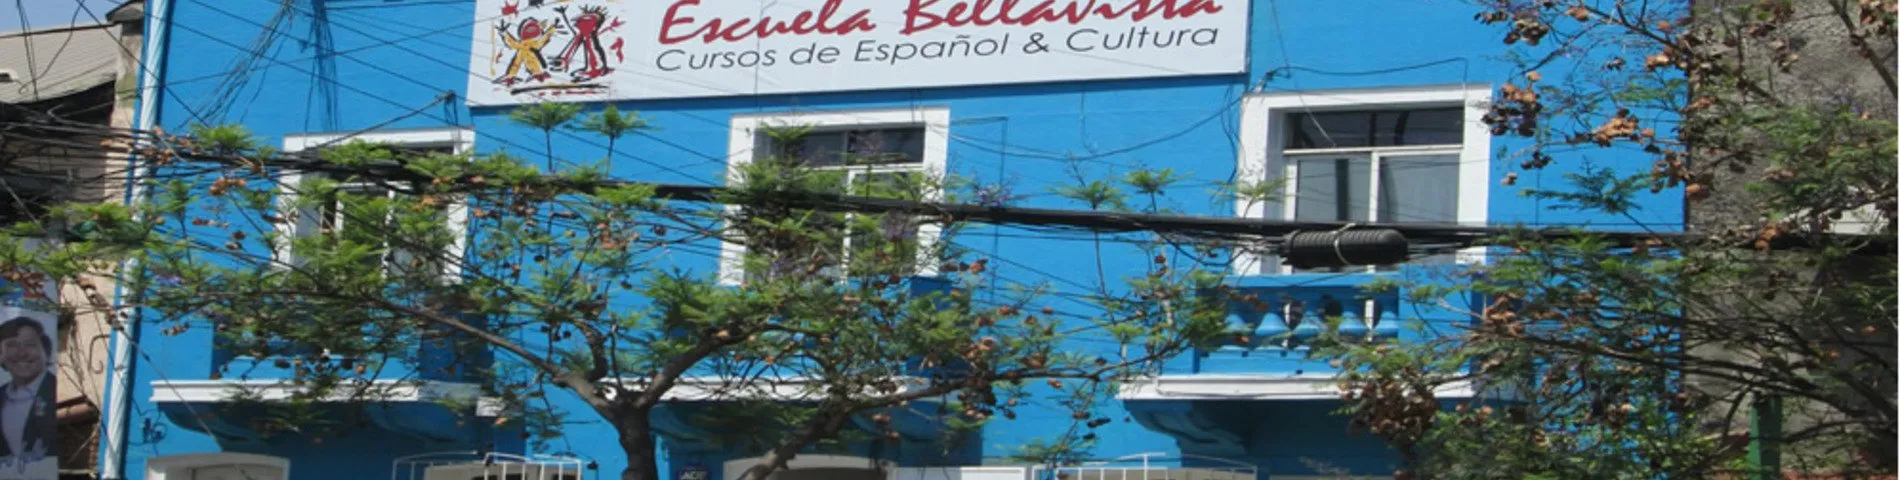 Escuela Bellavista picture 1